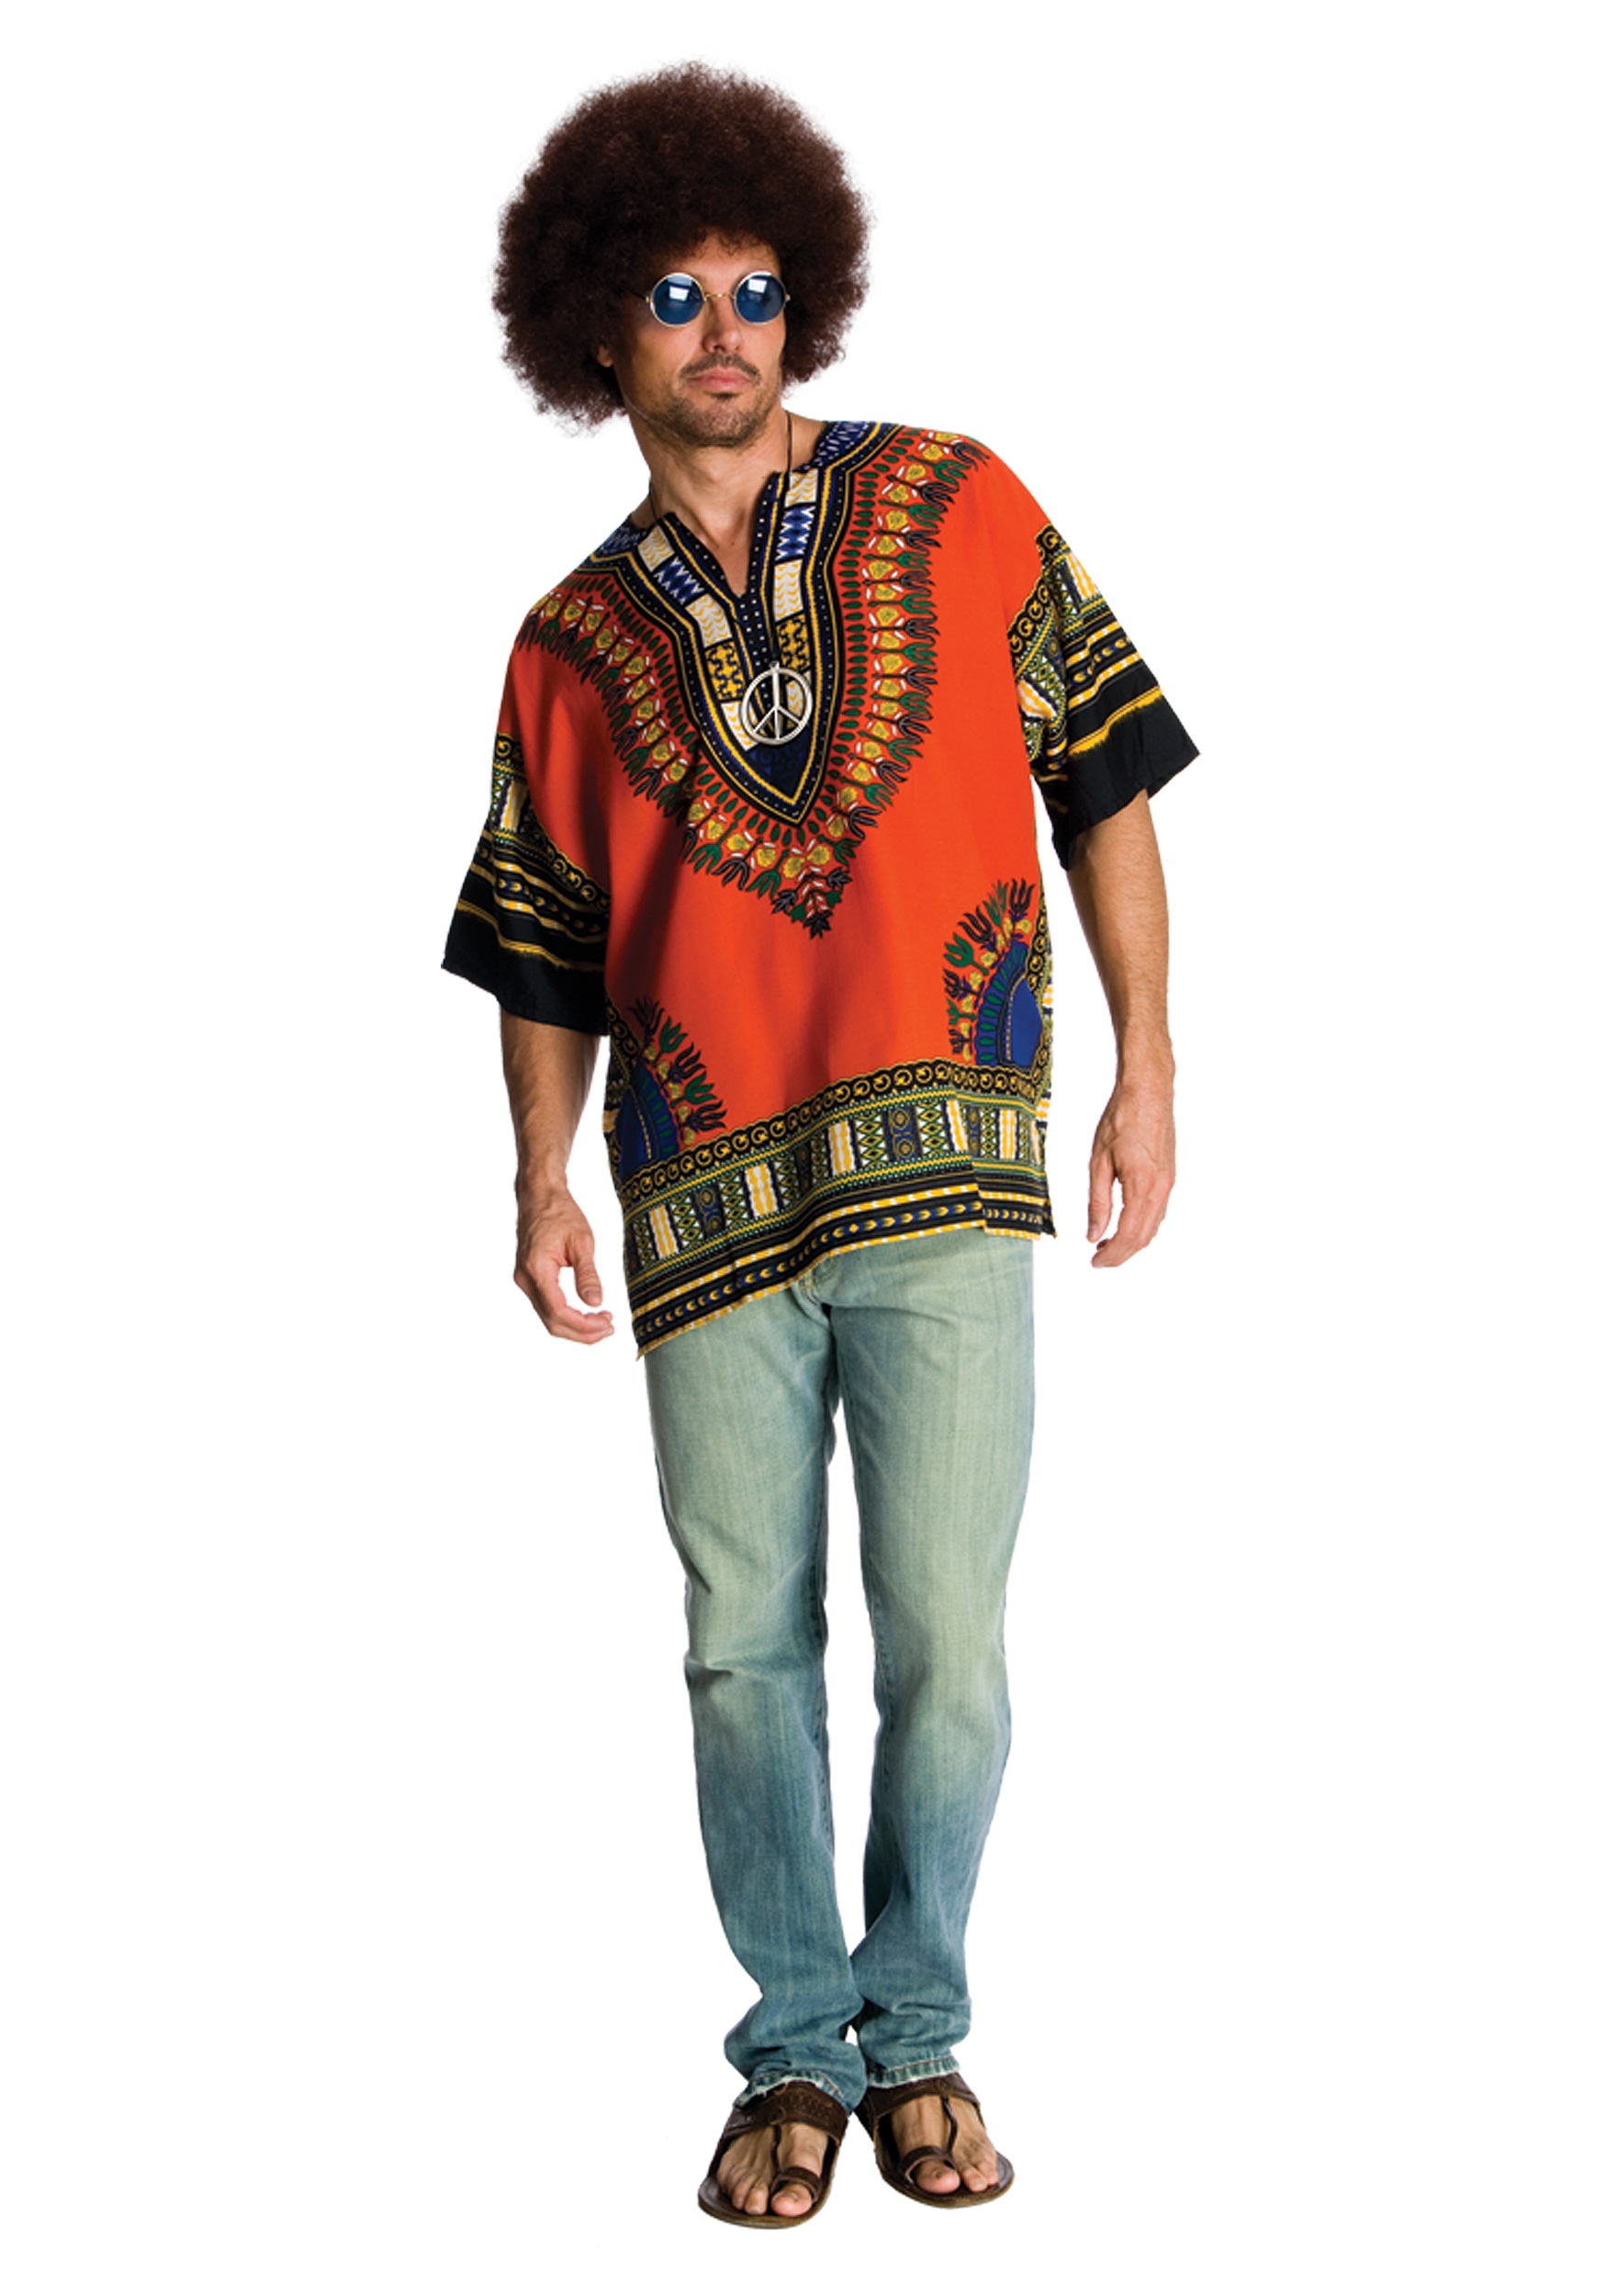 https://images.halloween.com/products/9361/1-1/hippie-dude-costume.jpg